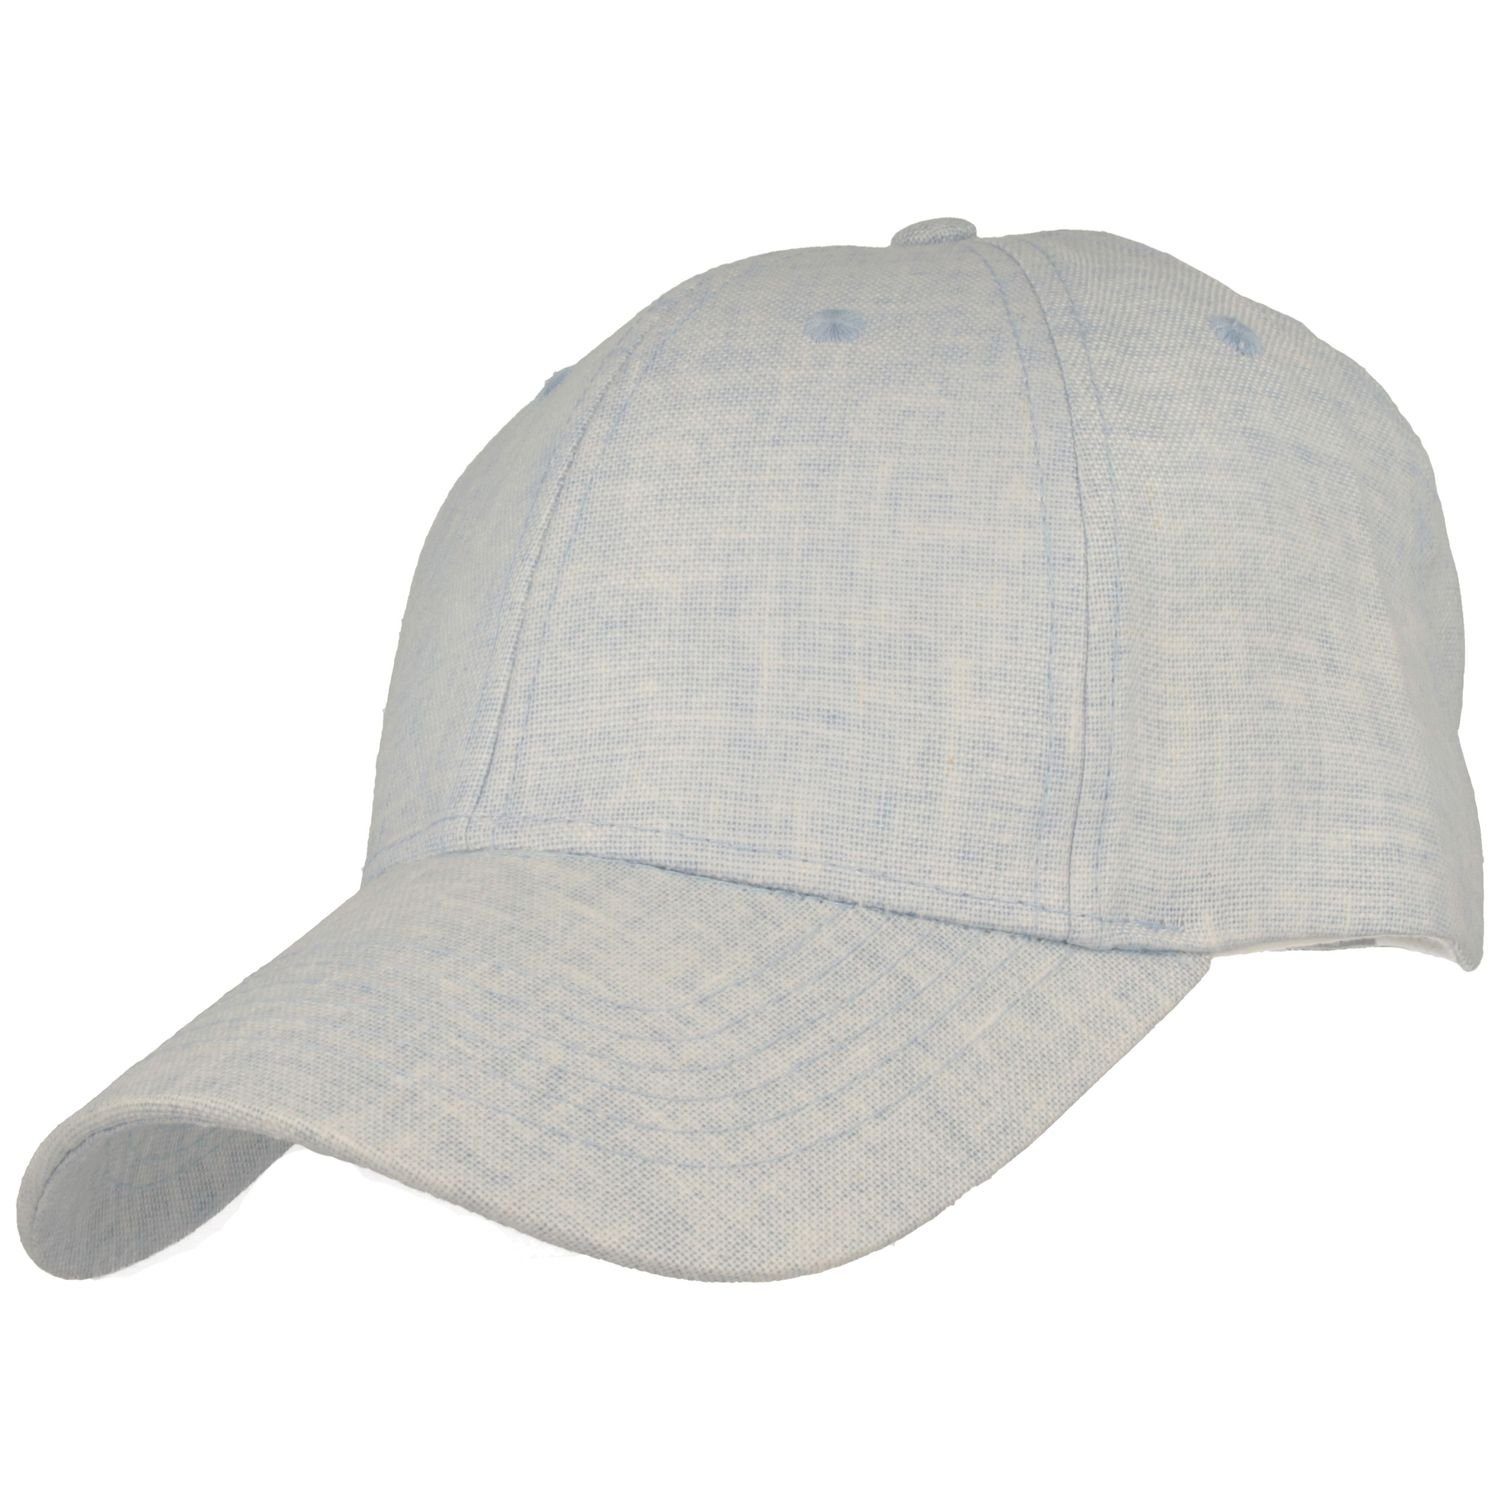 Breiter Baseball Cap Damen Baseball-Cap aus Leinen und Baumwolle 505-Himmelblau | Baseball Caps